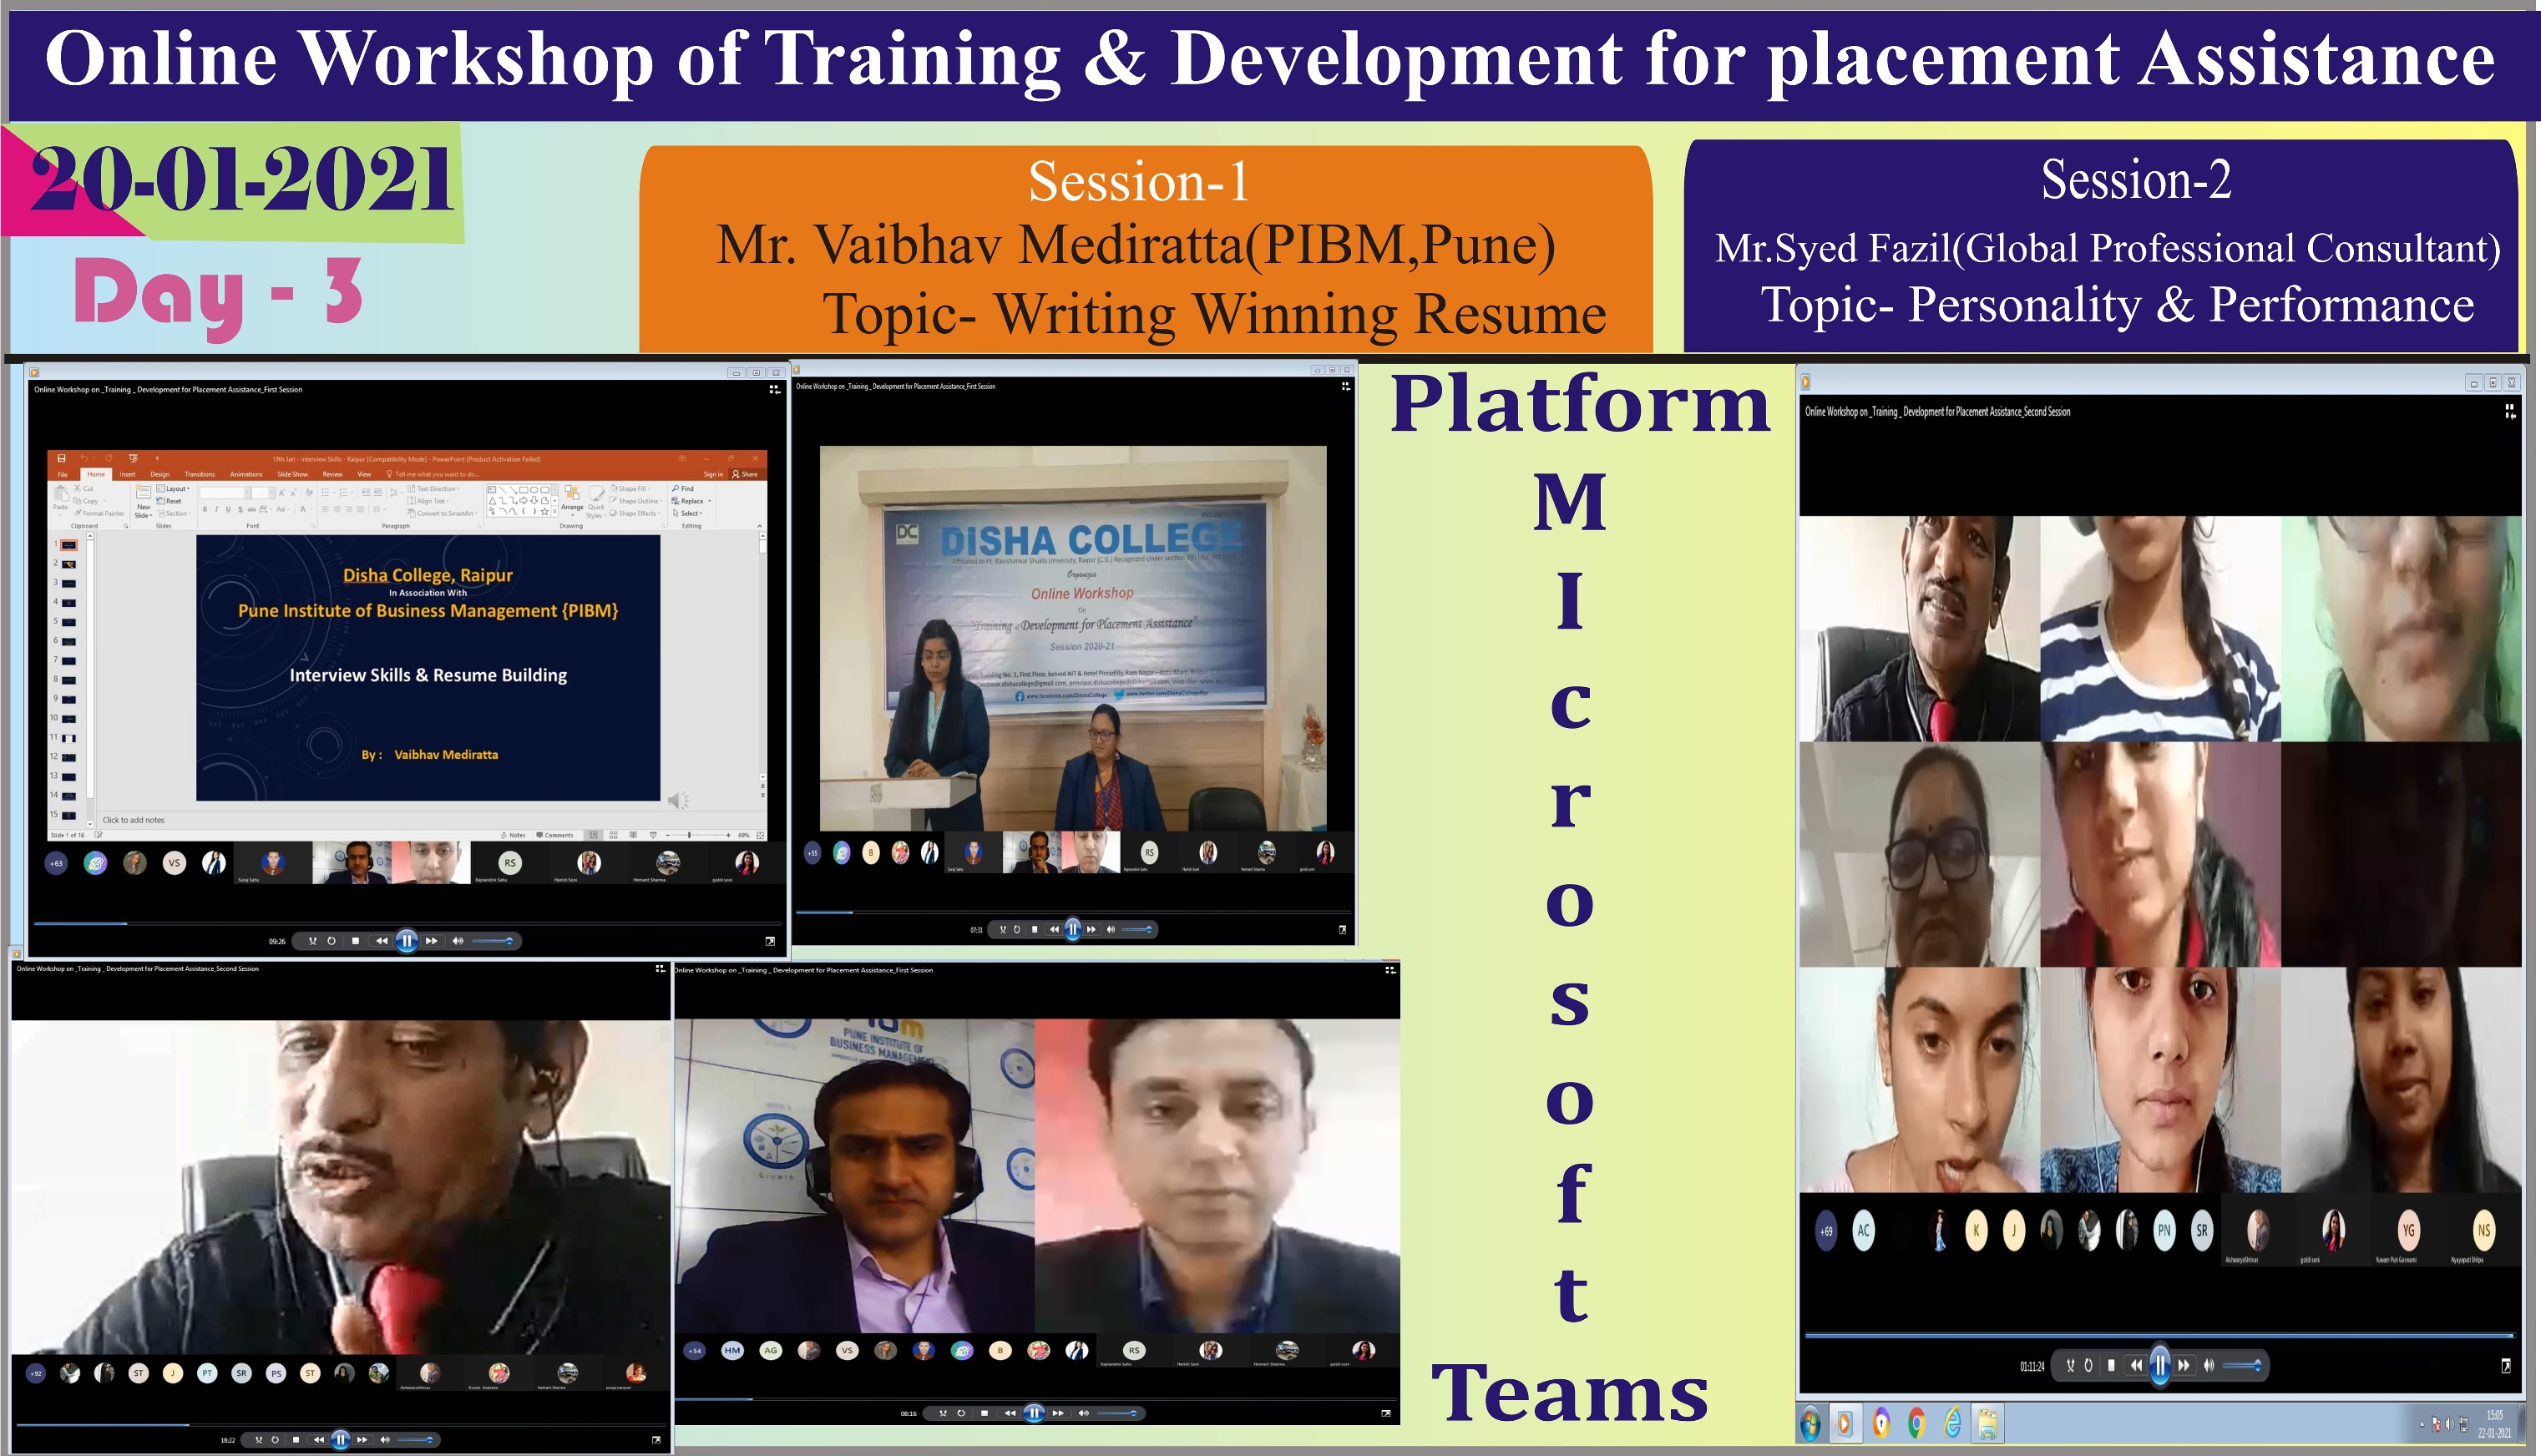 Online Workshop of Training & Development for Placement Assistance Program Day-3